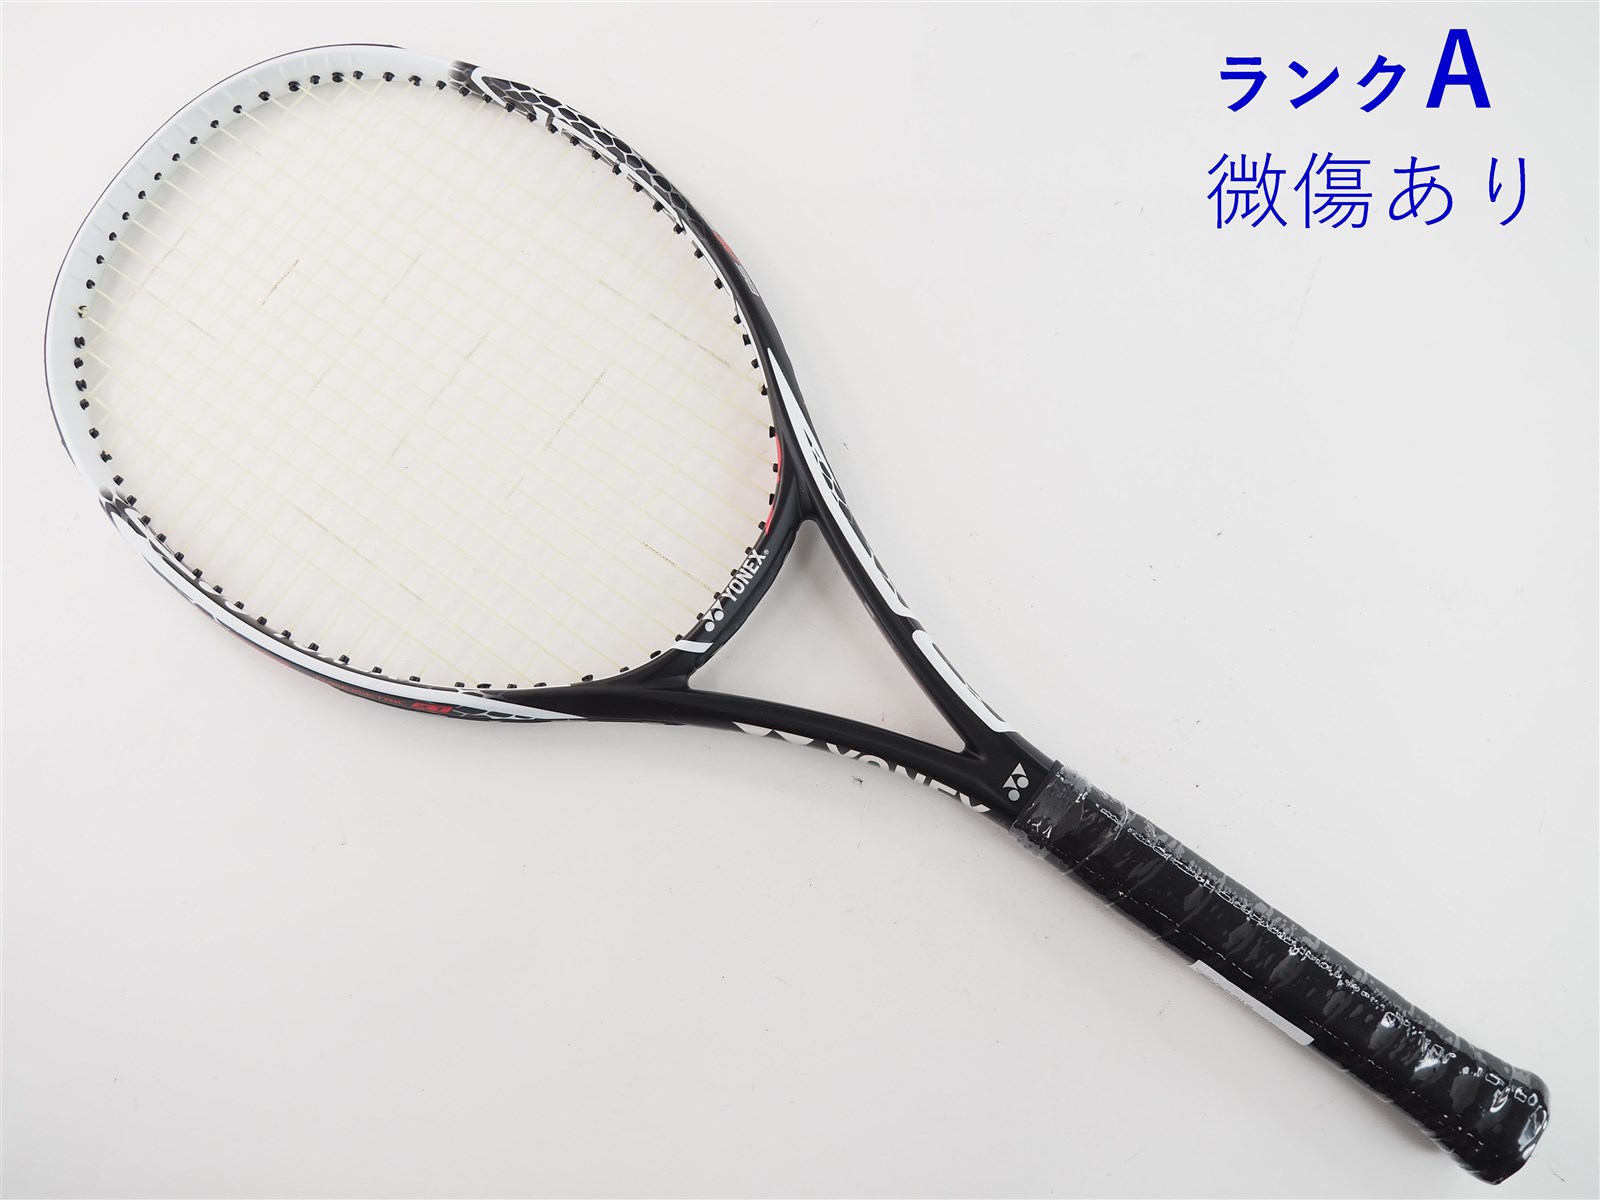 VCORE SV 100 300g G2 4本セット - テニス